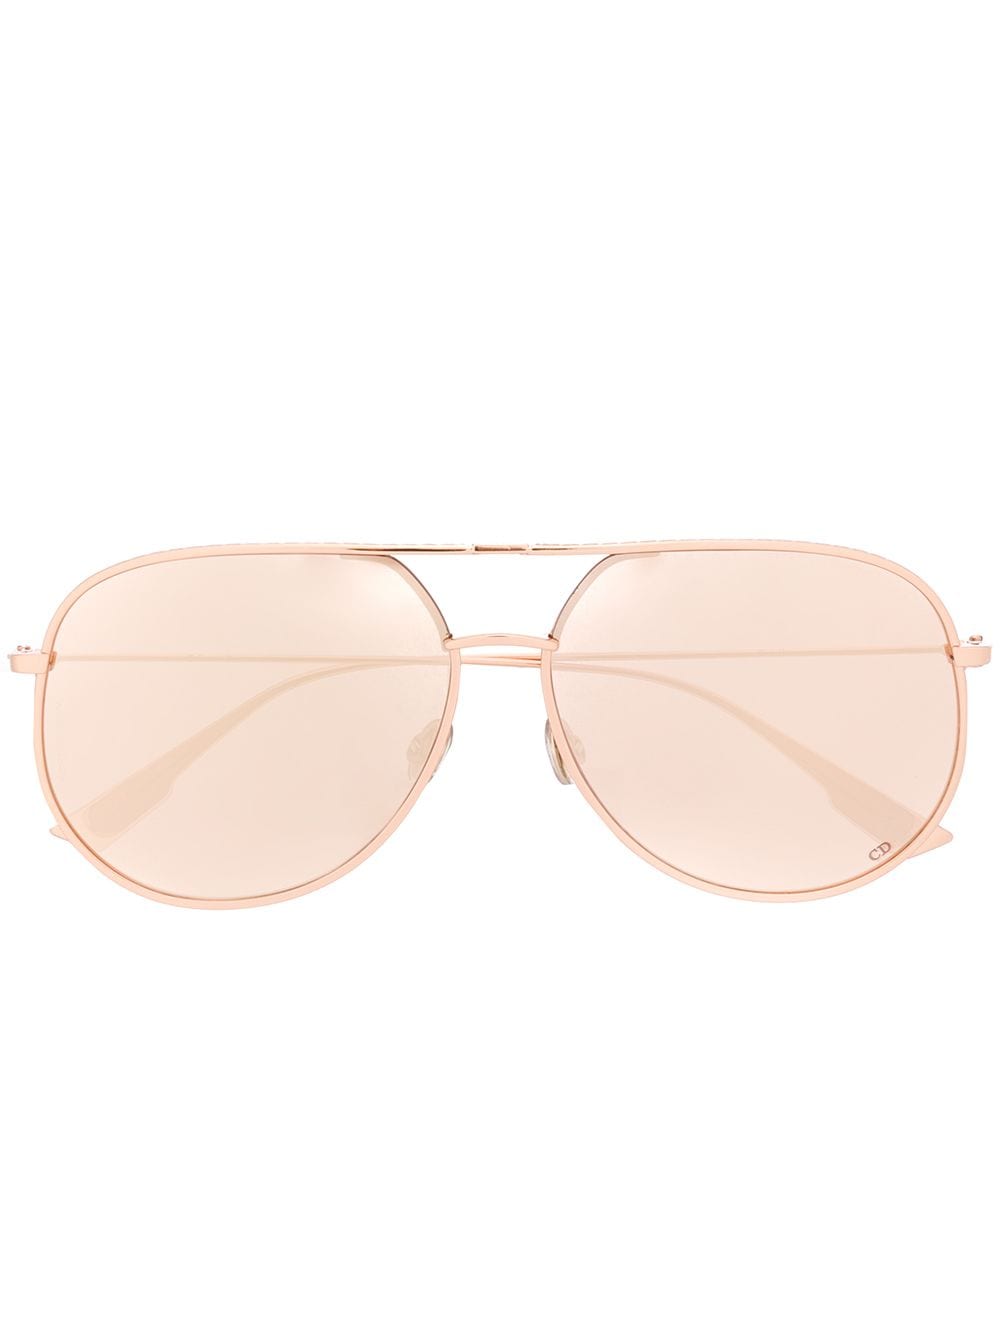 dior sunglasses on sale